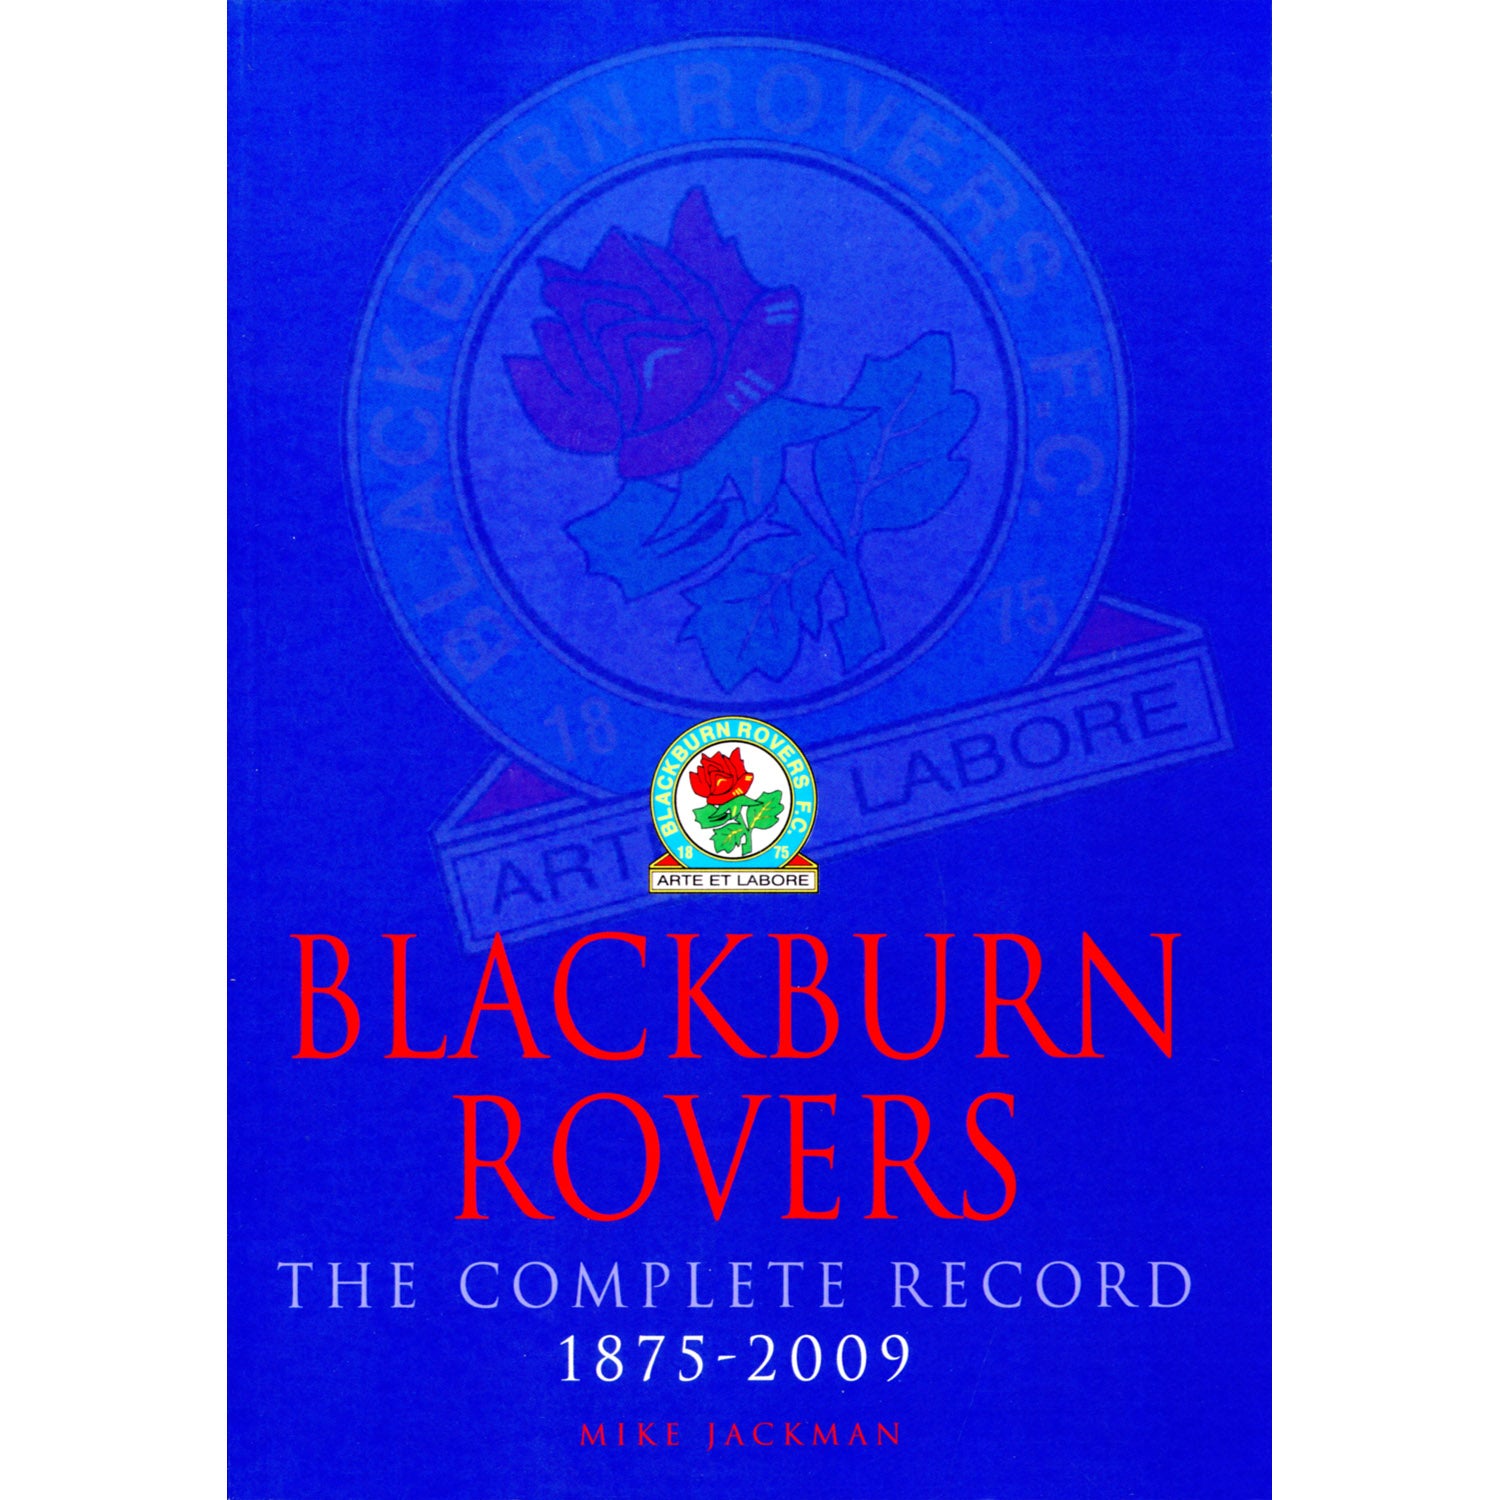 Blackburn Rovers – The Complete Record 1875-2009